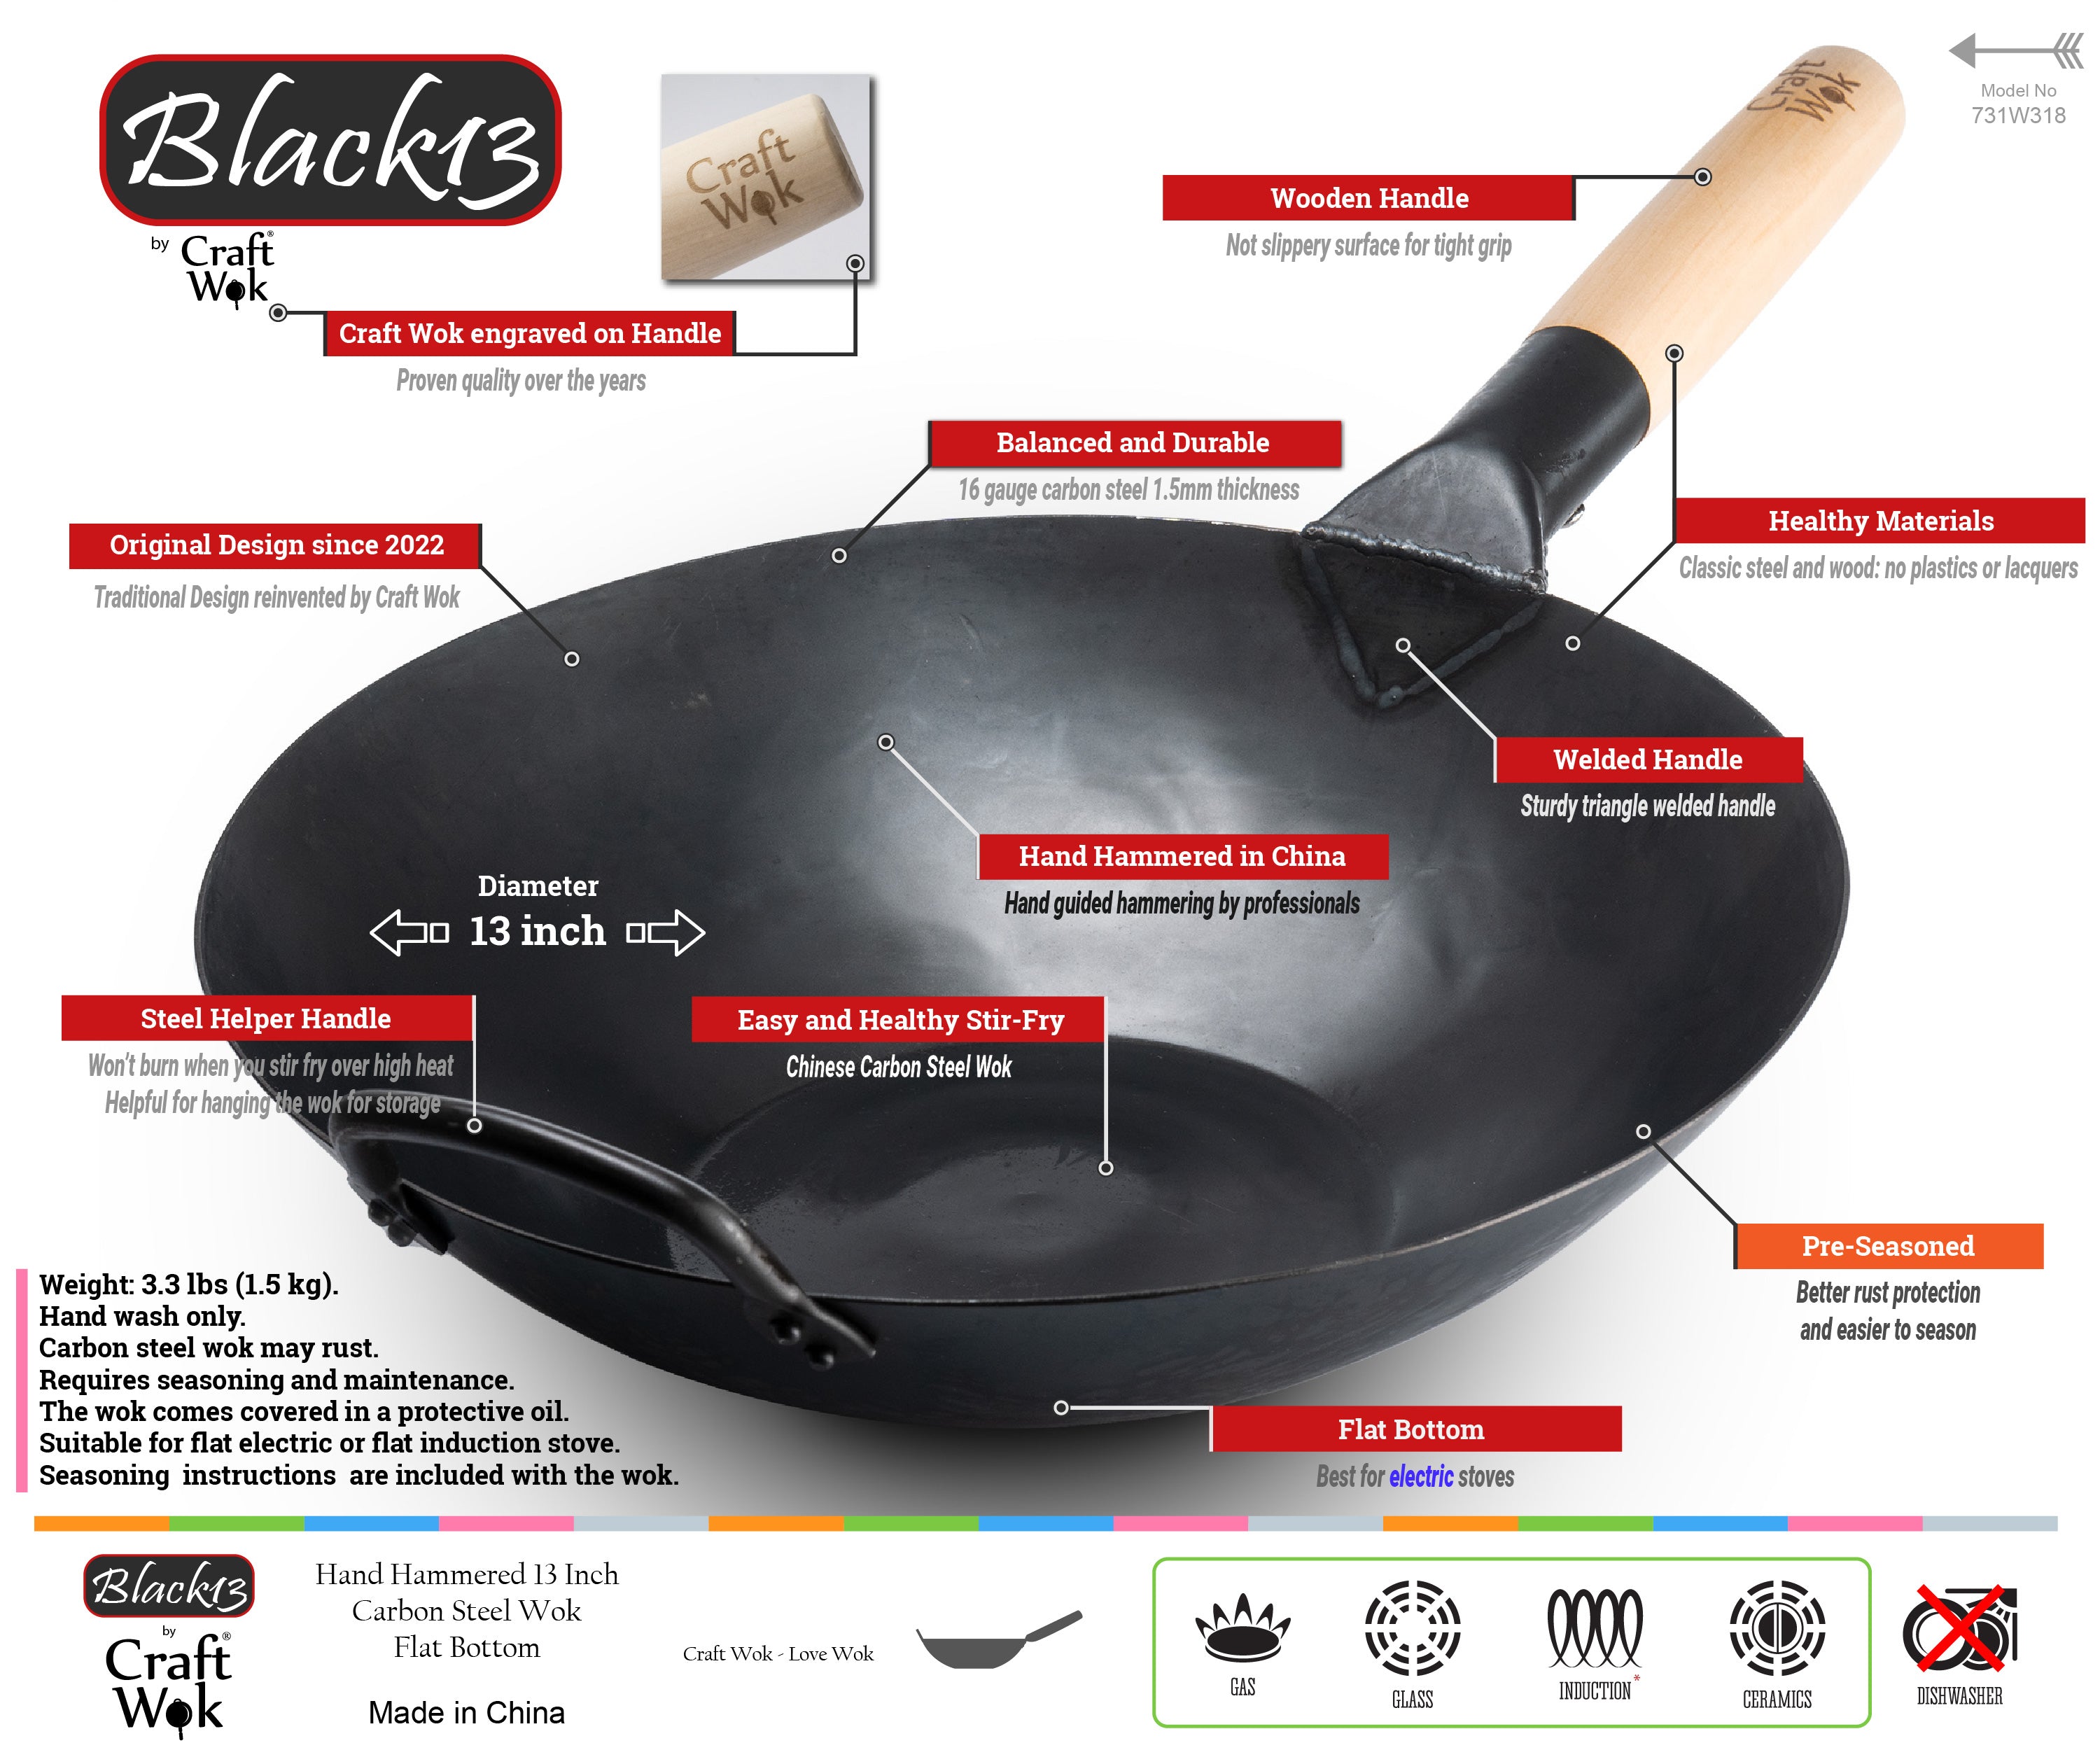 Black13 by Craft Wok Flat Pre-Seasoned Hammered Carbon Steel Wok with Wooden and Steel Helper Handle (13 Inch, Flat Bottom) / 731W318